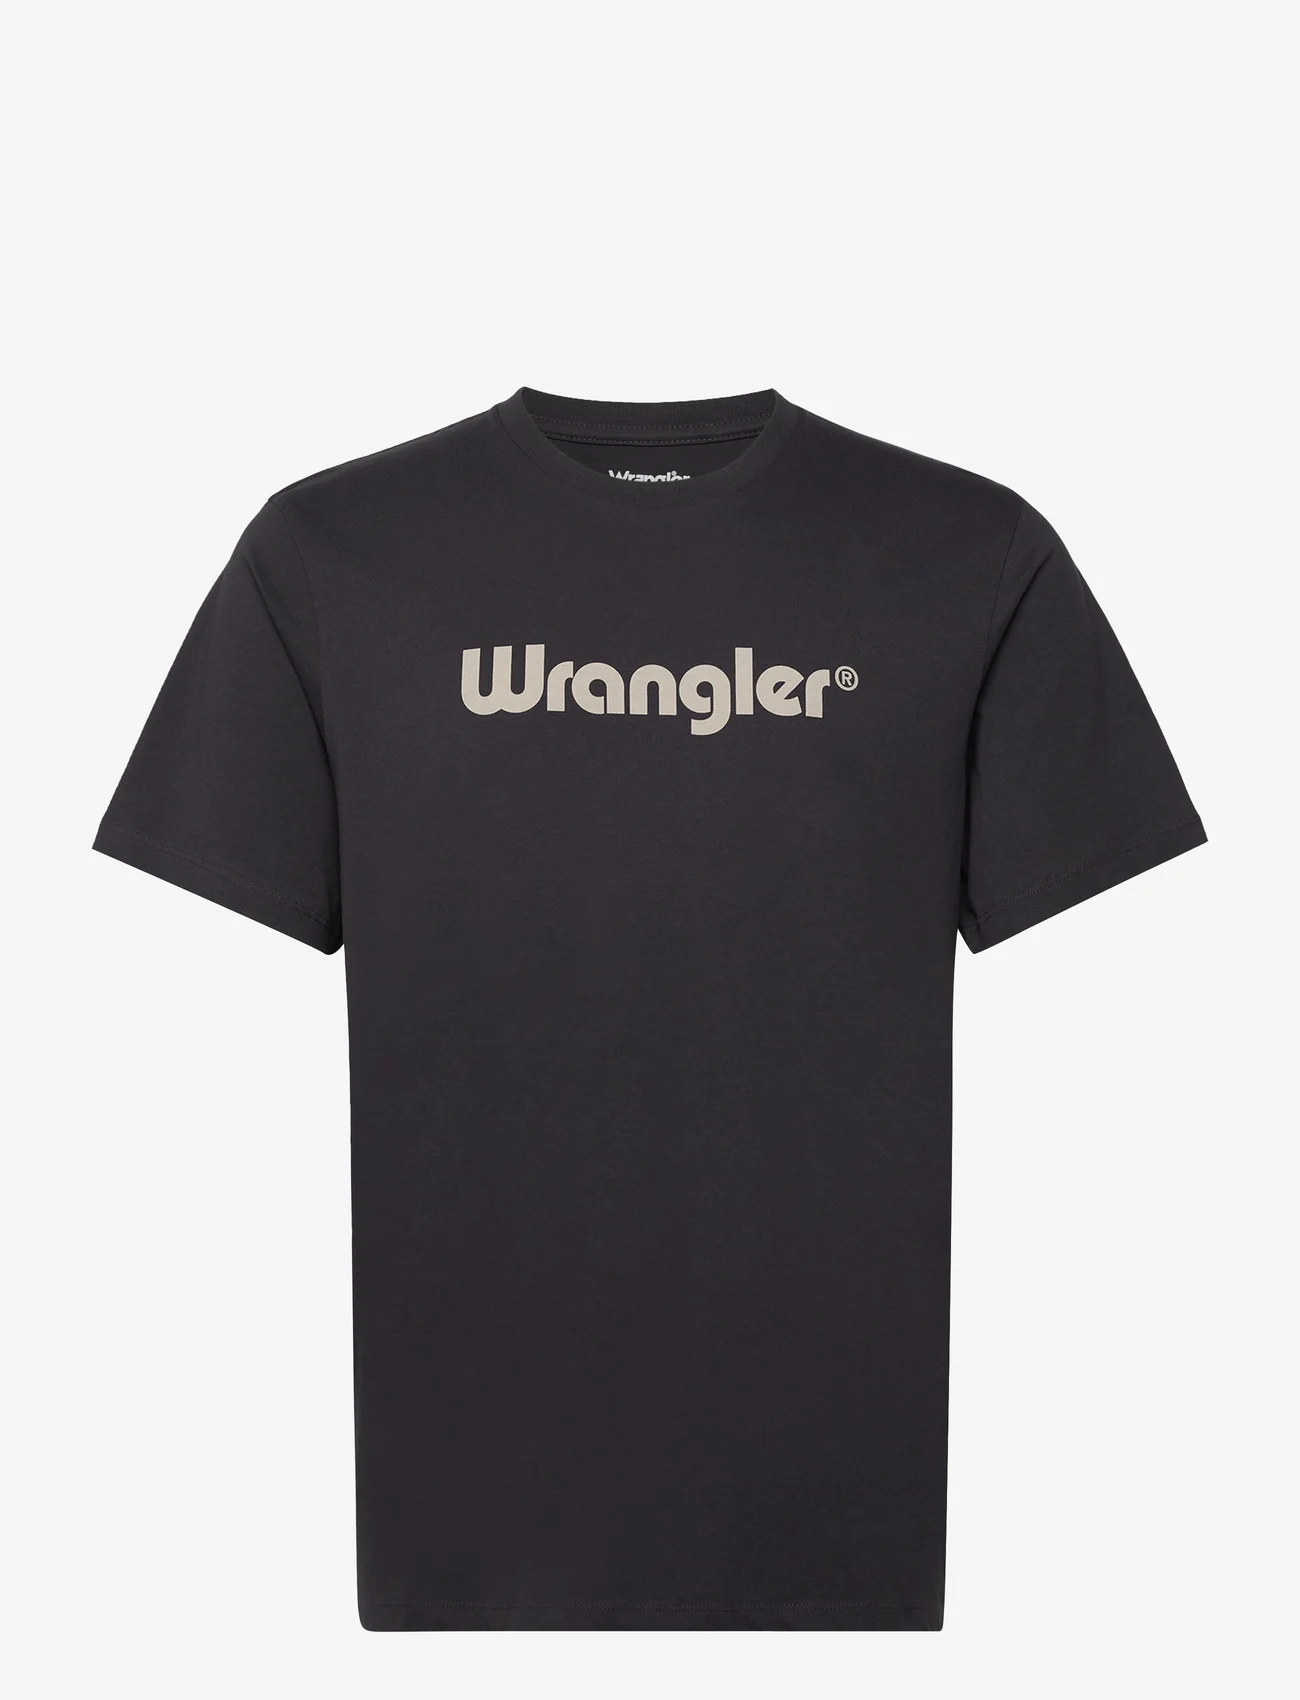 Wrangler - LOGO TEE - lowest prices - black - 0